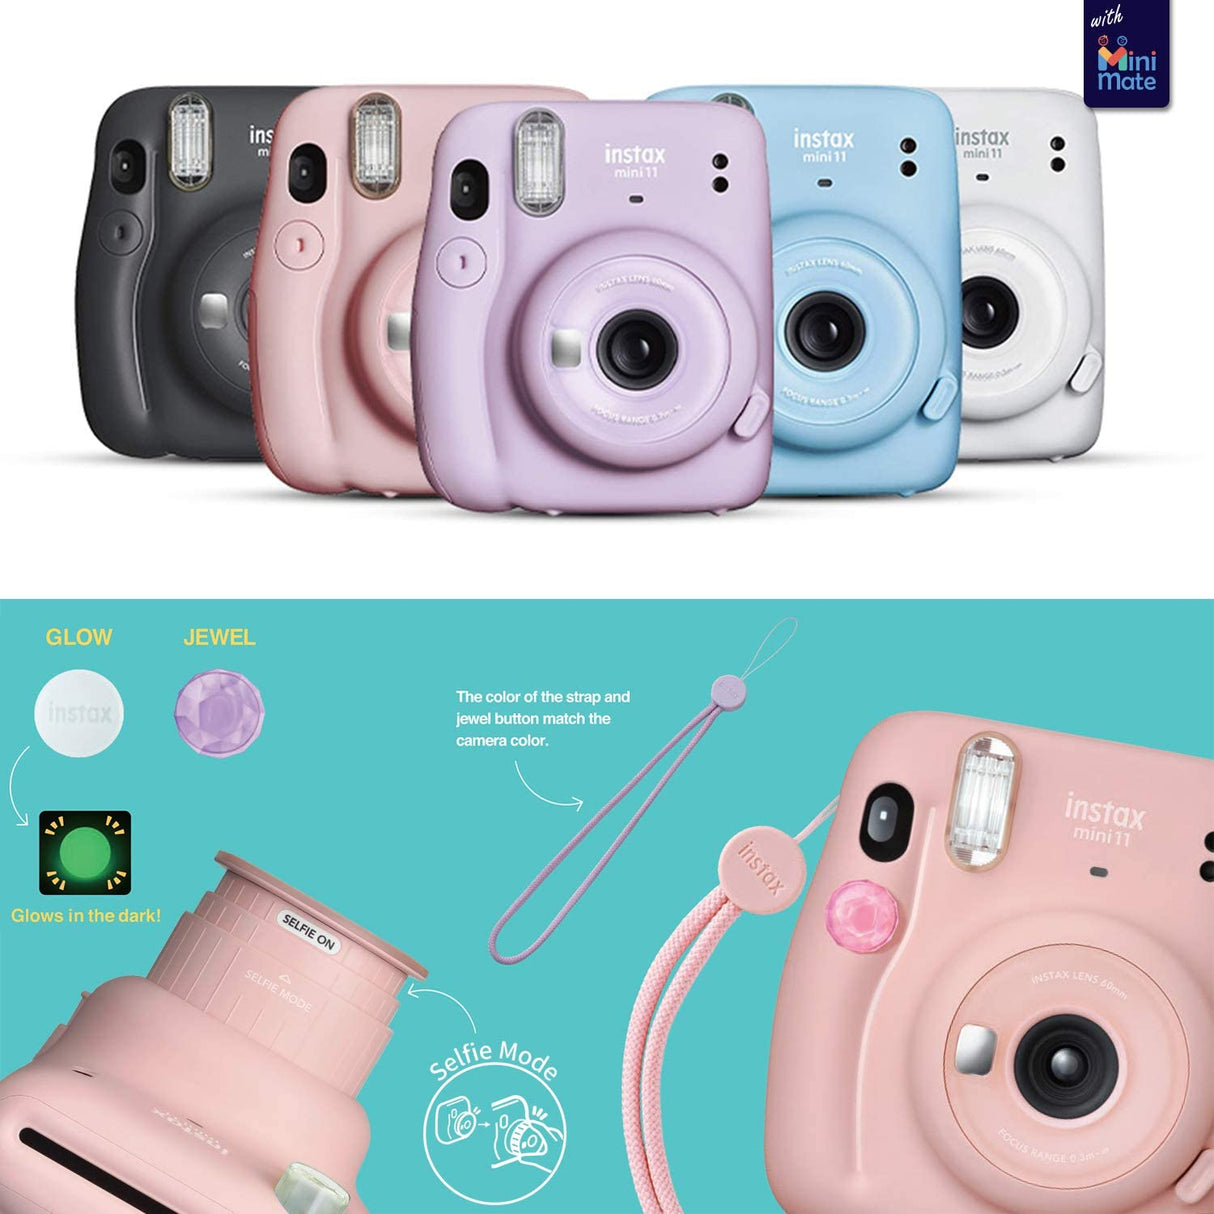 Fujifilm Instax Mini 11 Instant Camera Sky Blue + MiniMate Accessories Bundle + Fuji Instax Film Value Pack (40 Sheets) Accessories Bundle, Color Filters, Album, Frames